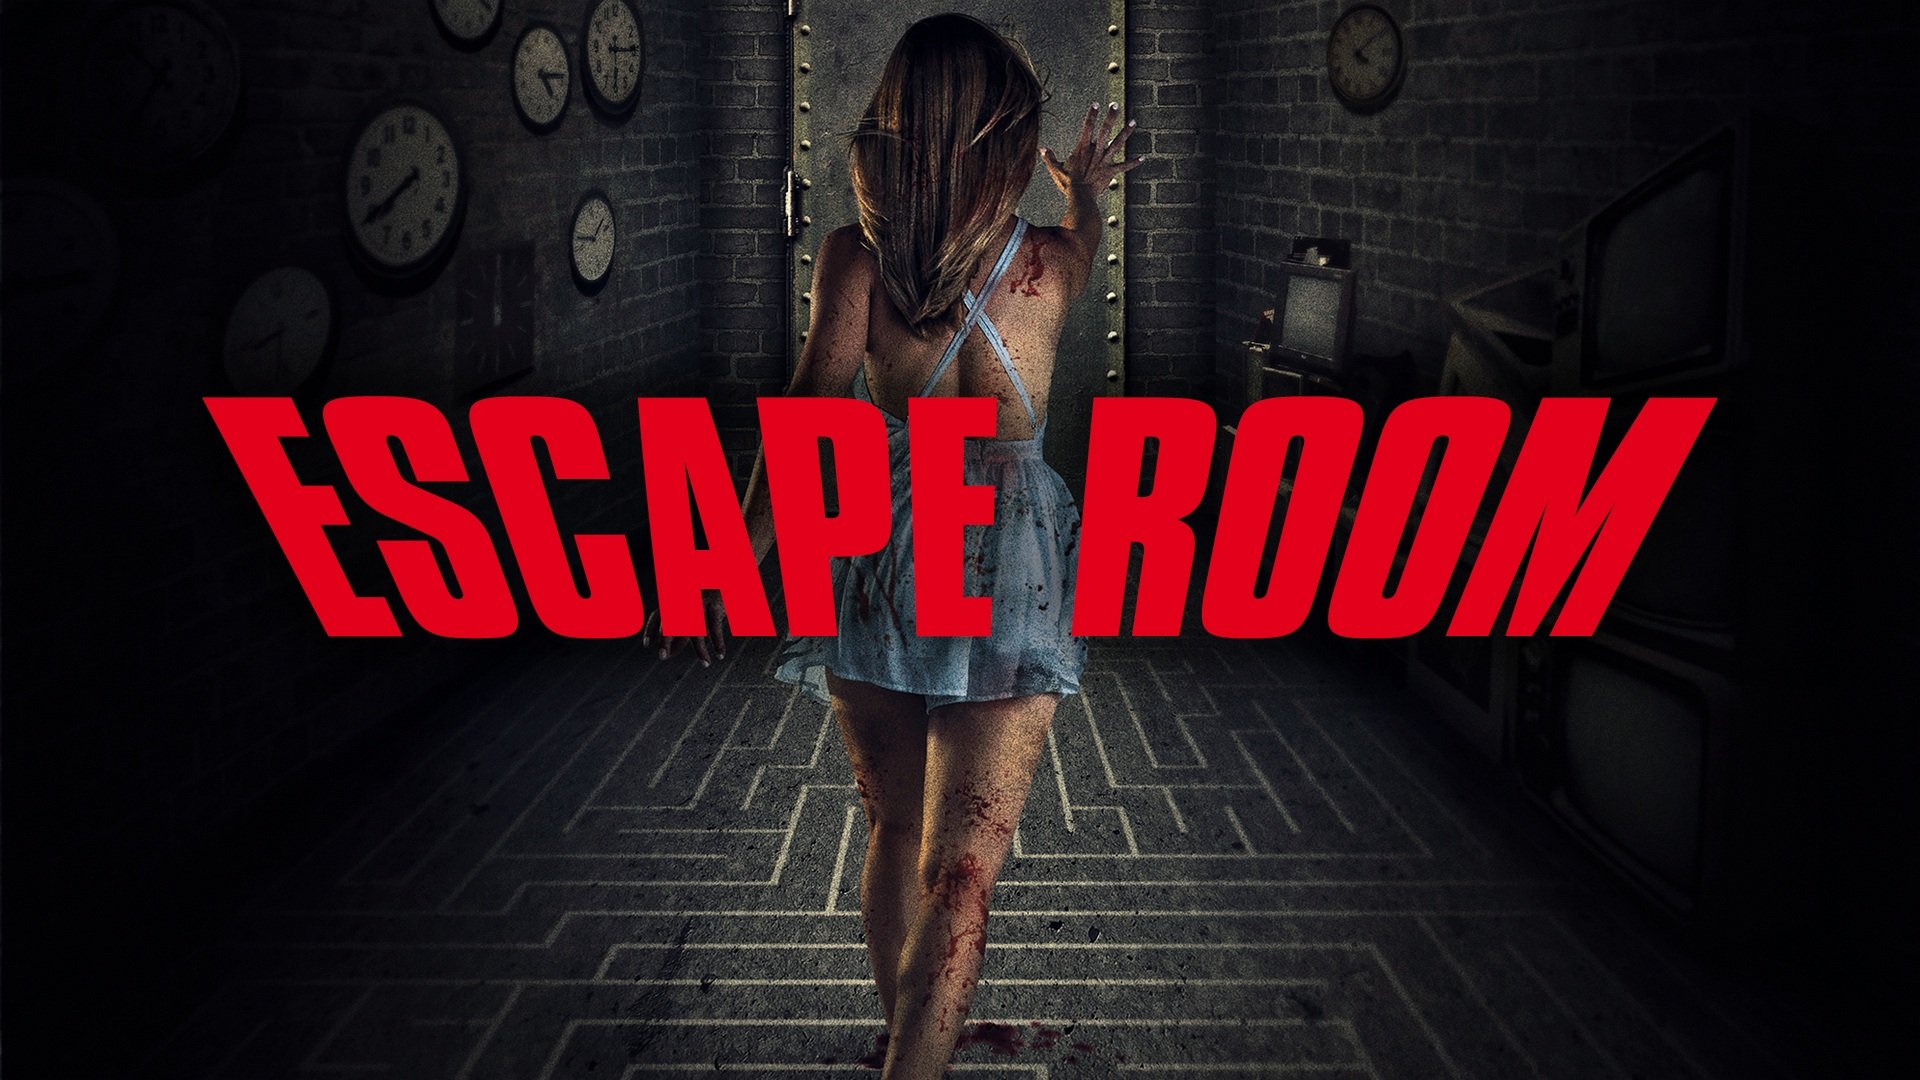 escape room 2 review